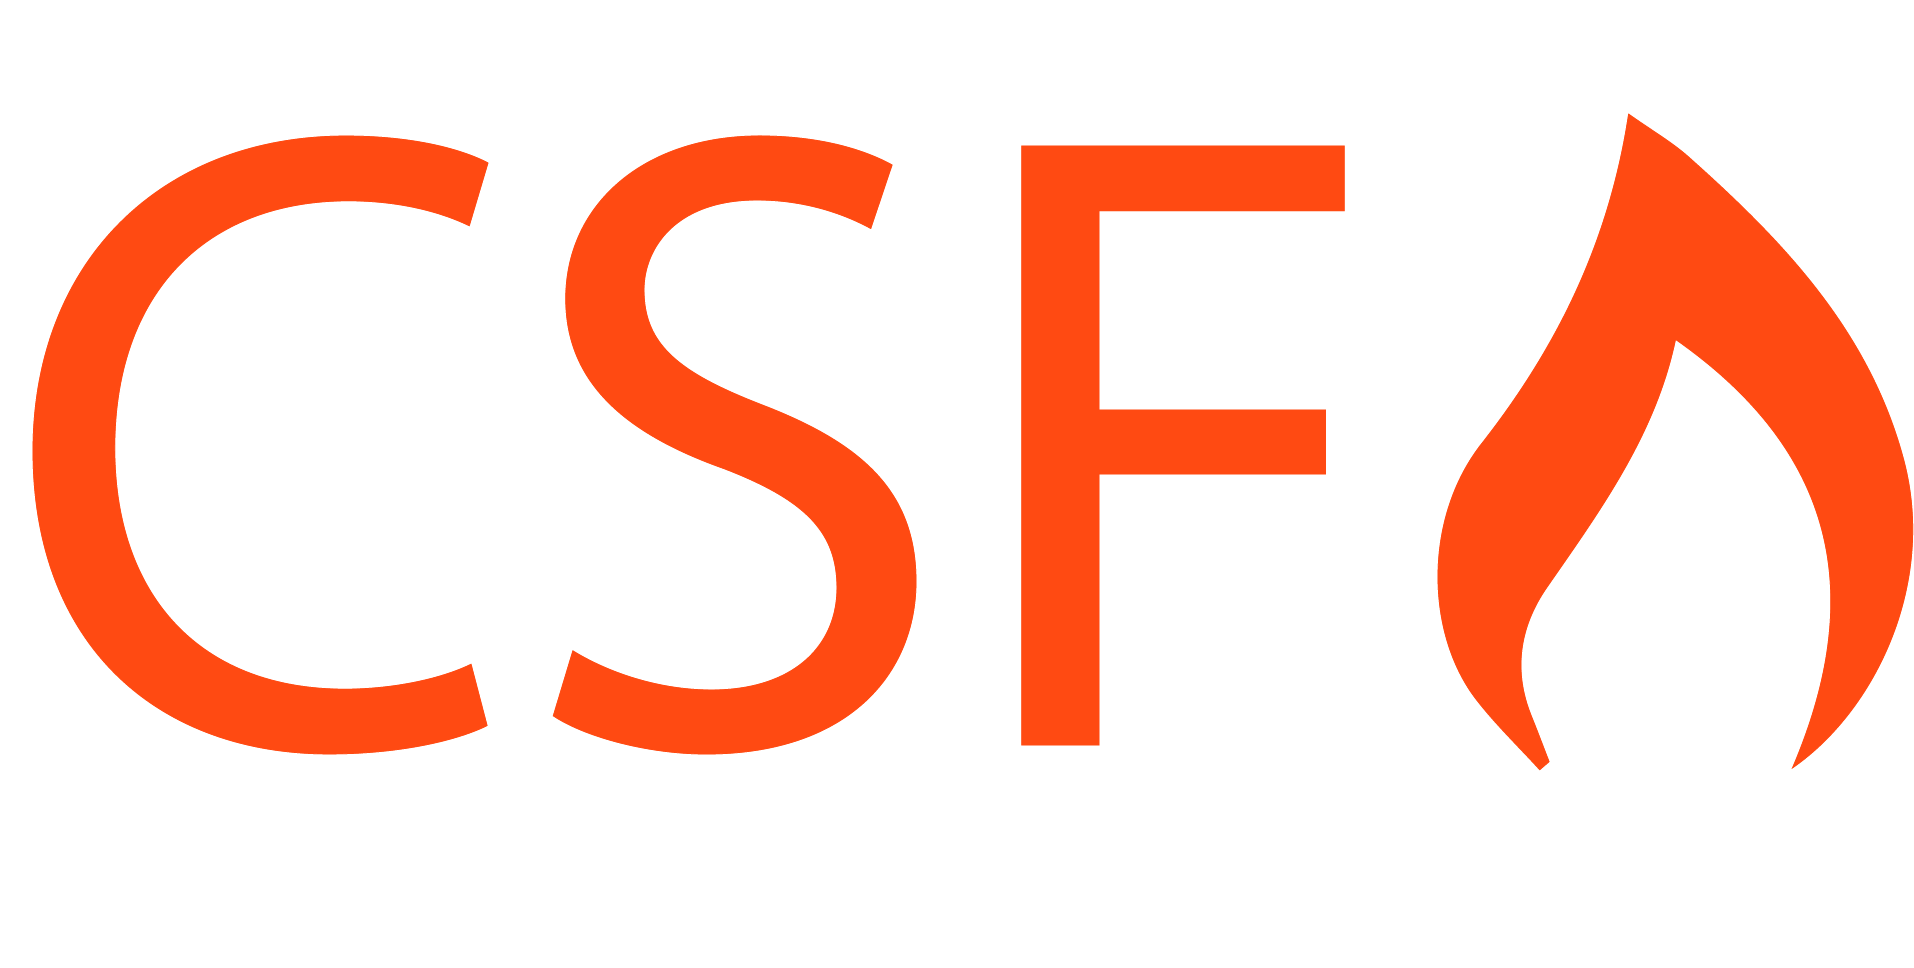 CSF Logo - CSF Wageningen – Wageningen Student Council Party